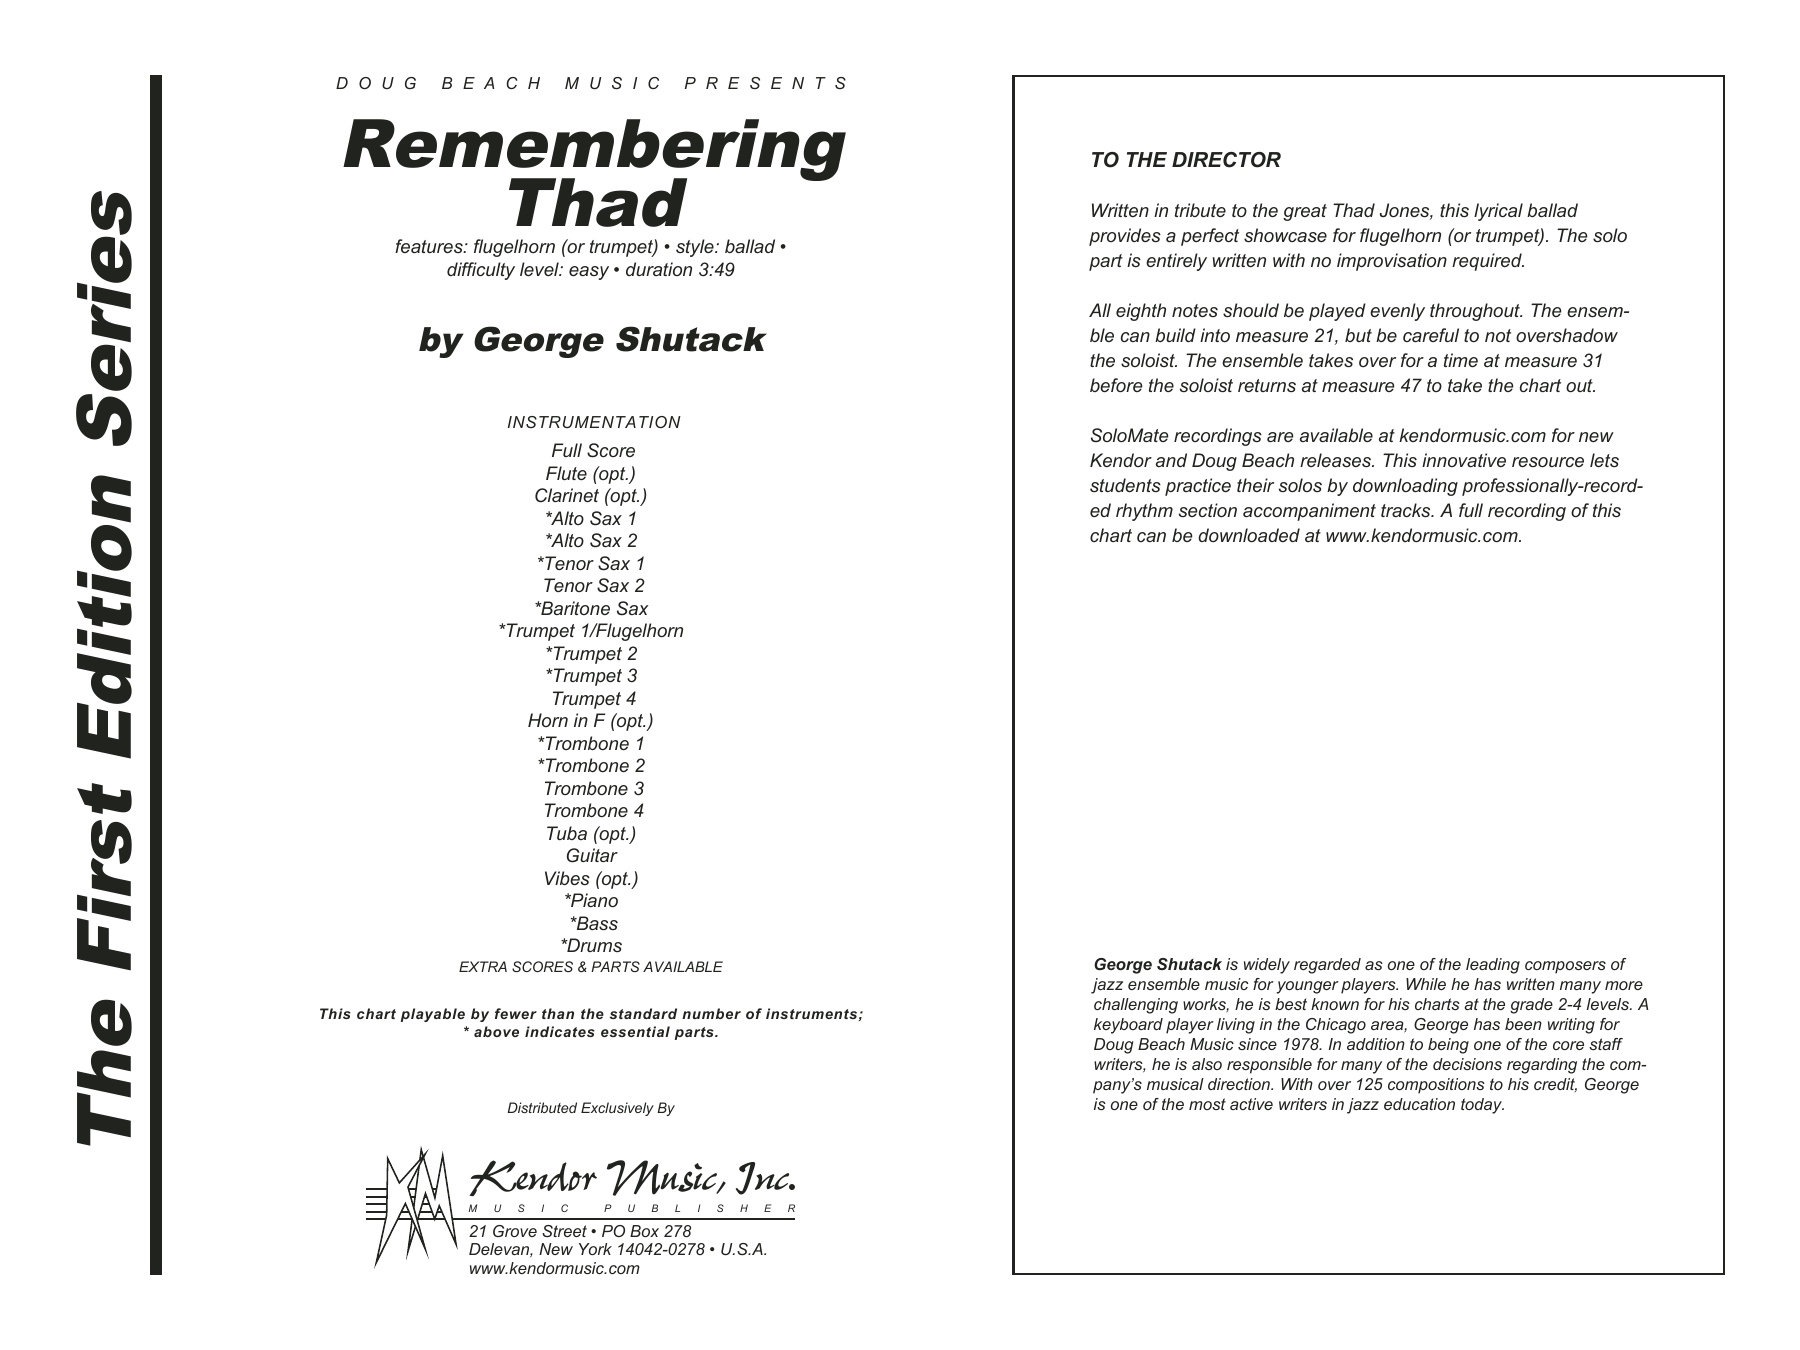 Download George Shutack Remembering Thad - Full Score Sheet Music